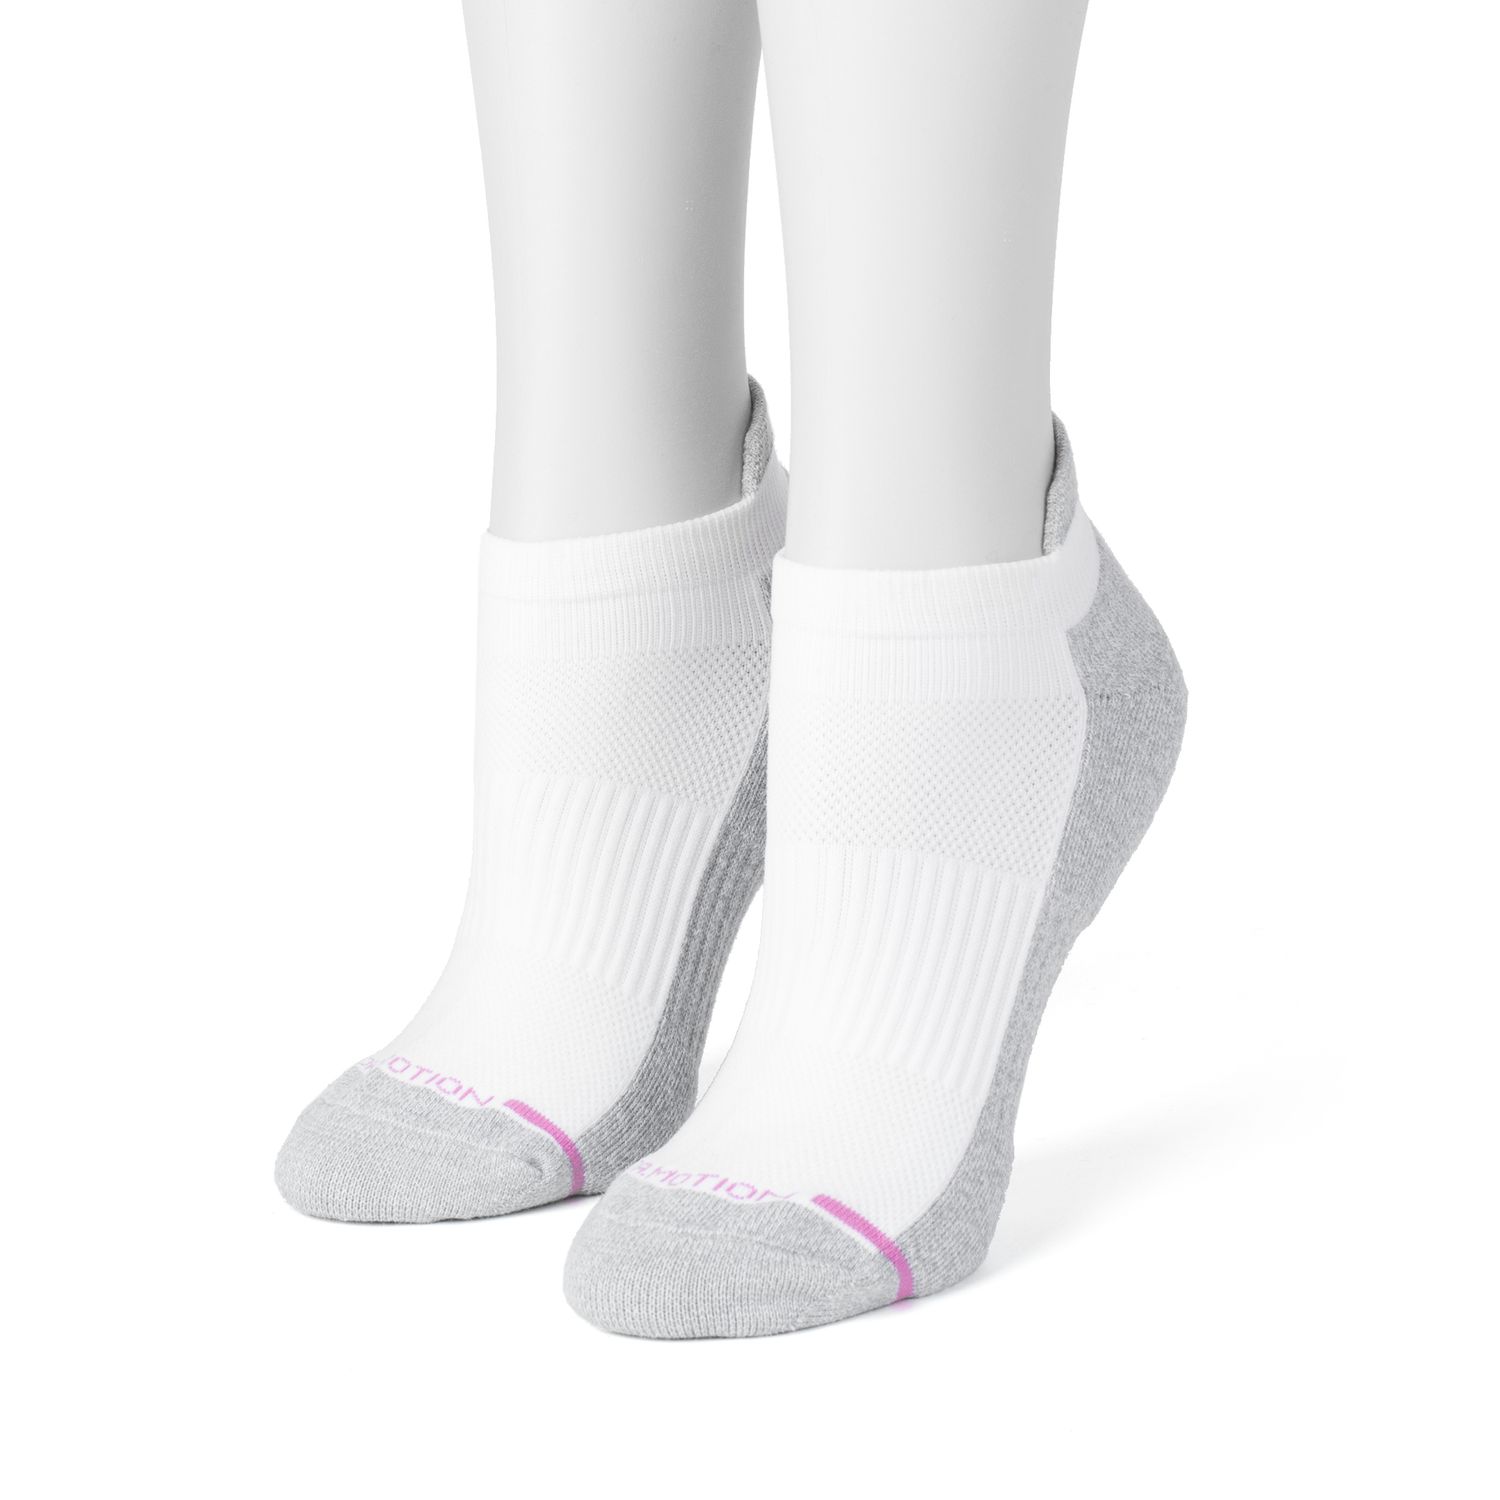 Image for Dr. Motion Women's 2-Pk. Compression Ankle Socks at Kohl's.